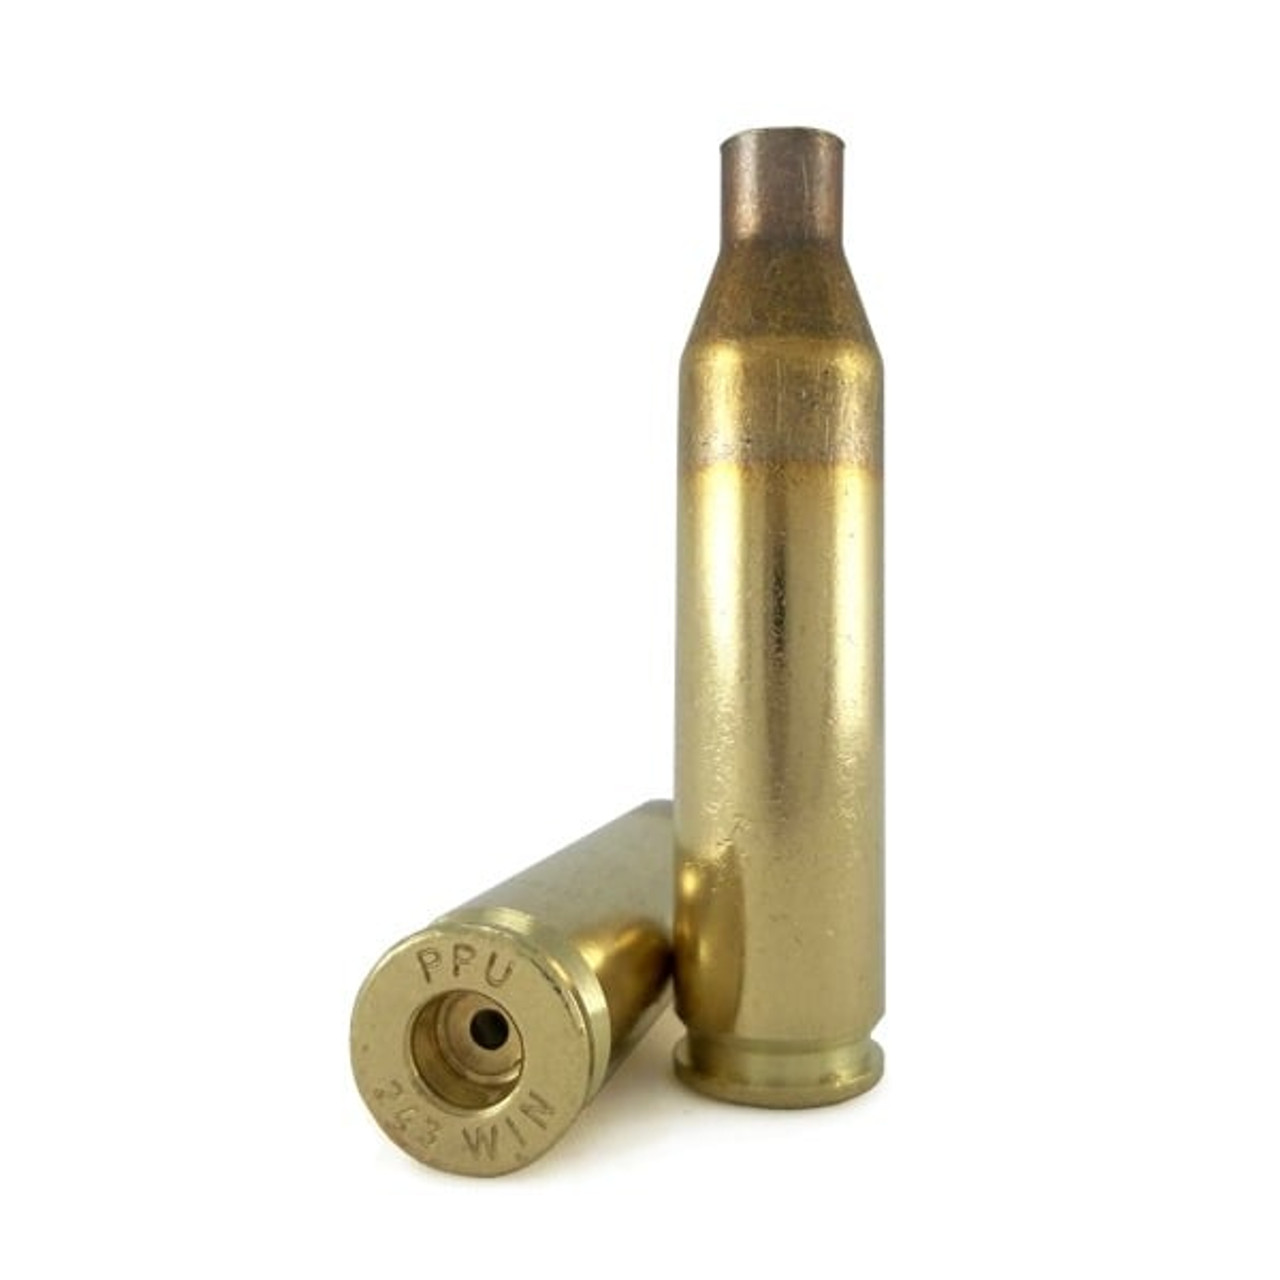 PPU 243 Winchester Brass (50 ct)